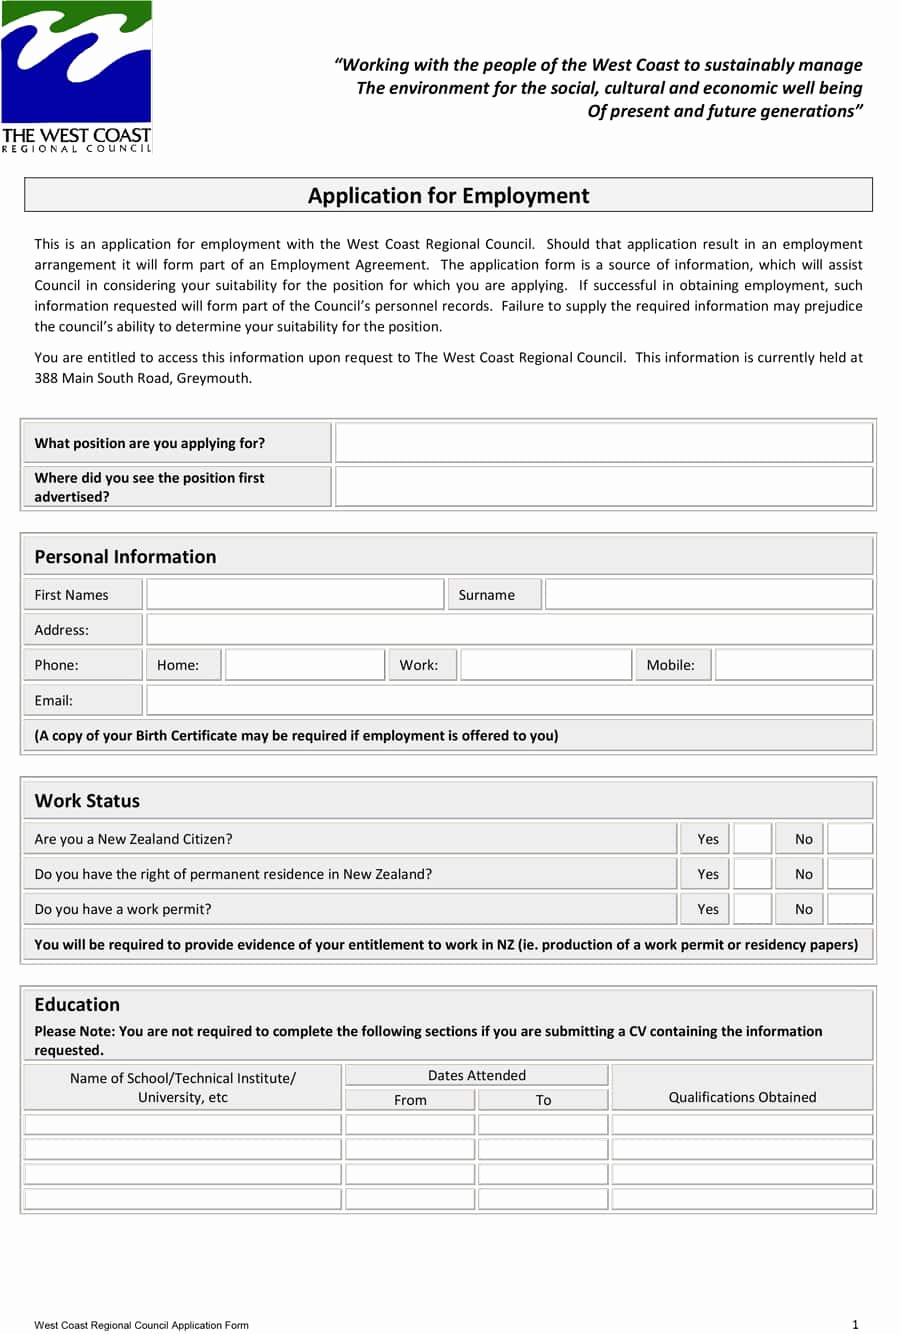 Free Printable Job Application Luxury 50 Free Employment Job Application form Templates